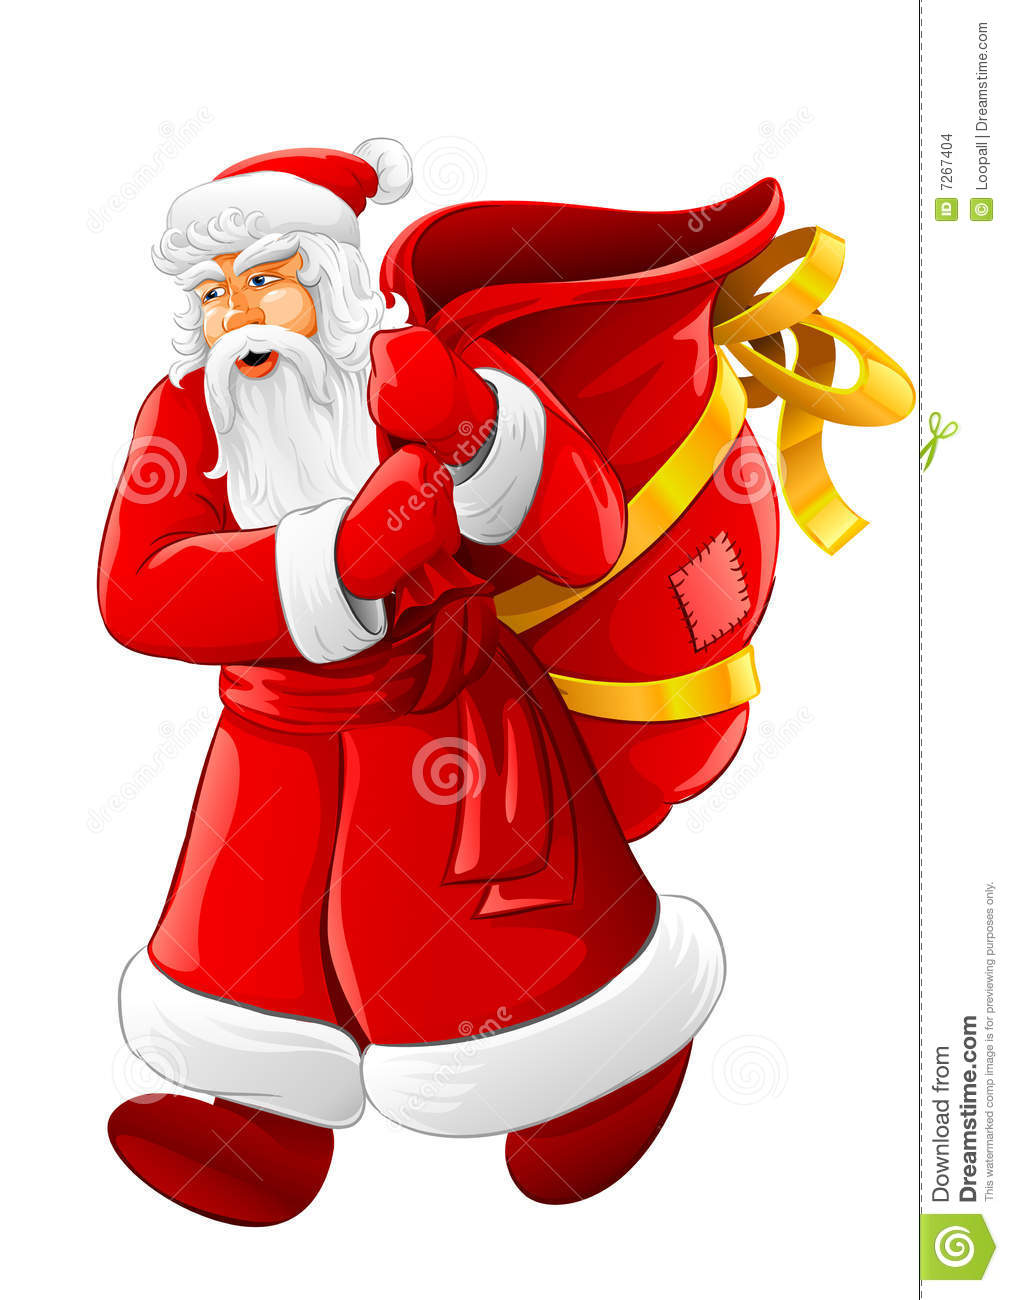 Christmas Santa Claus Walking With Big Empty Sack Stock Images   Image